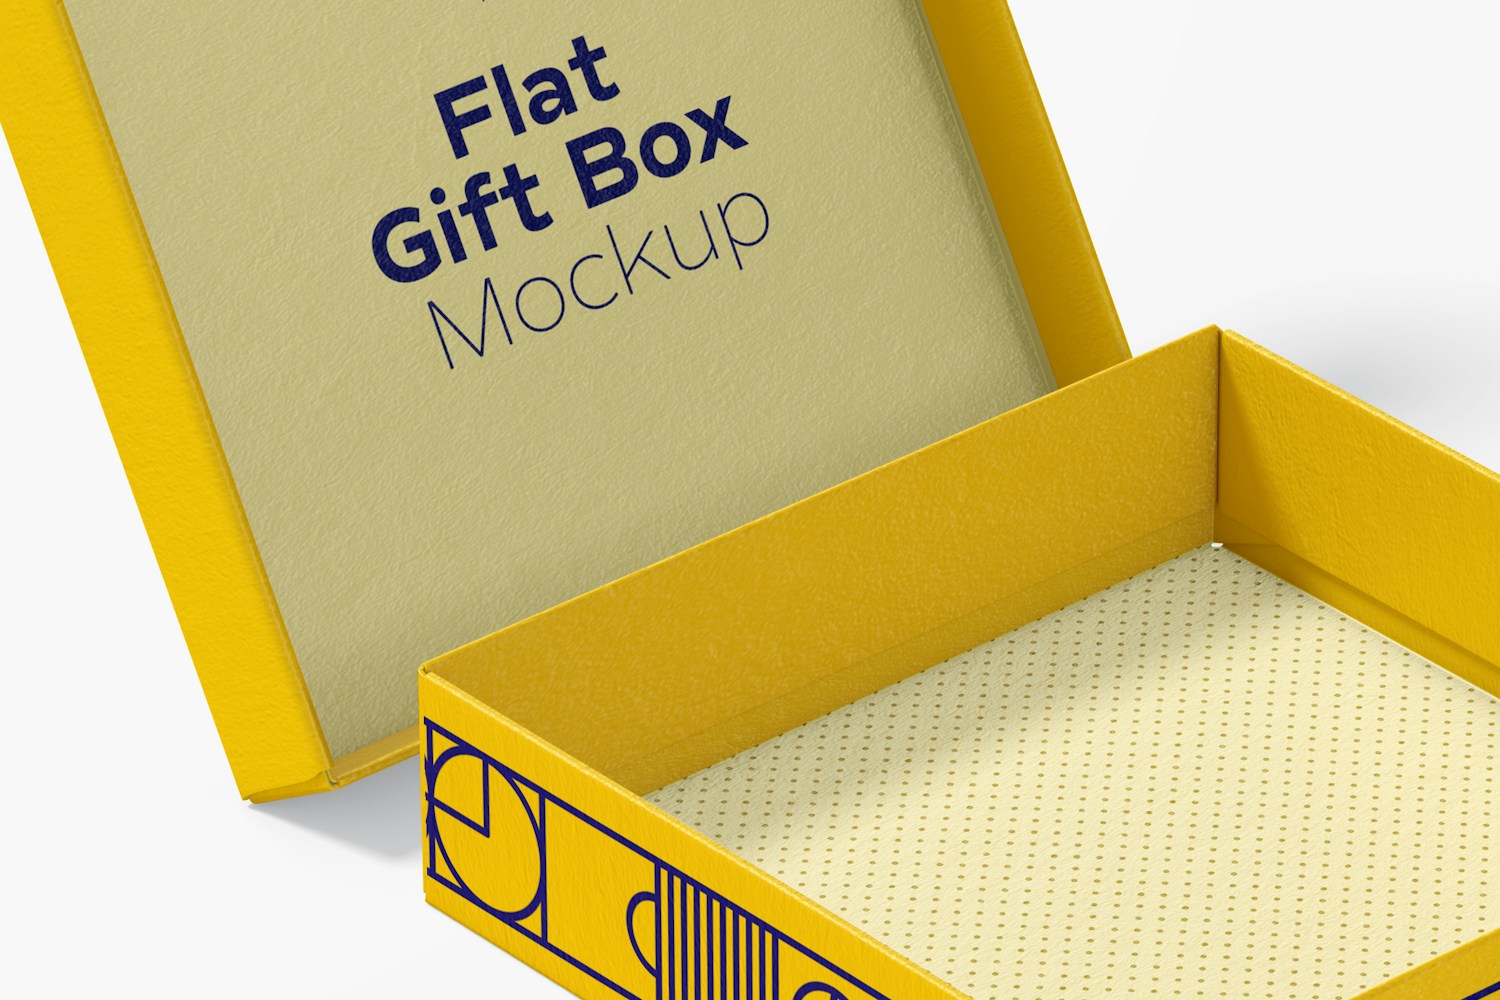 Flat Gift Box Mockup, Perspective